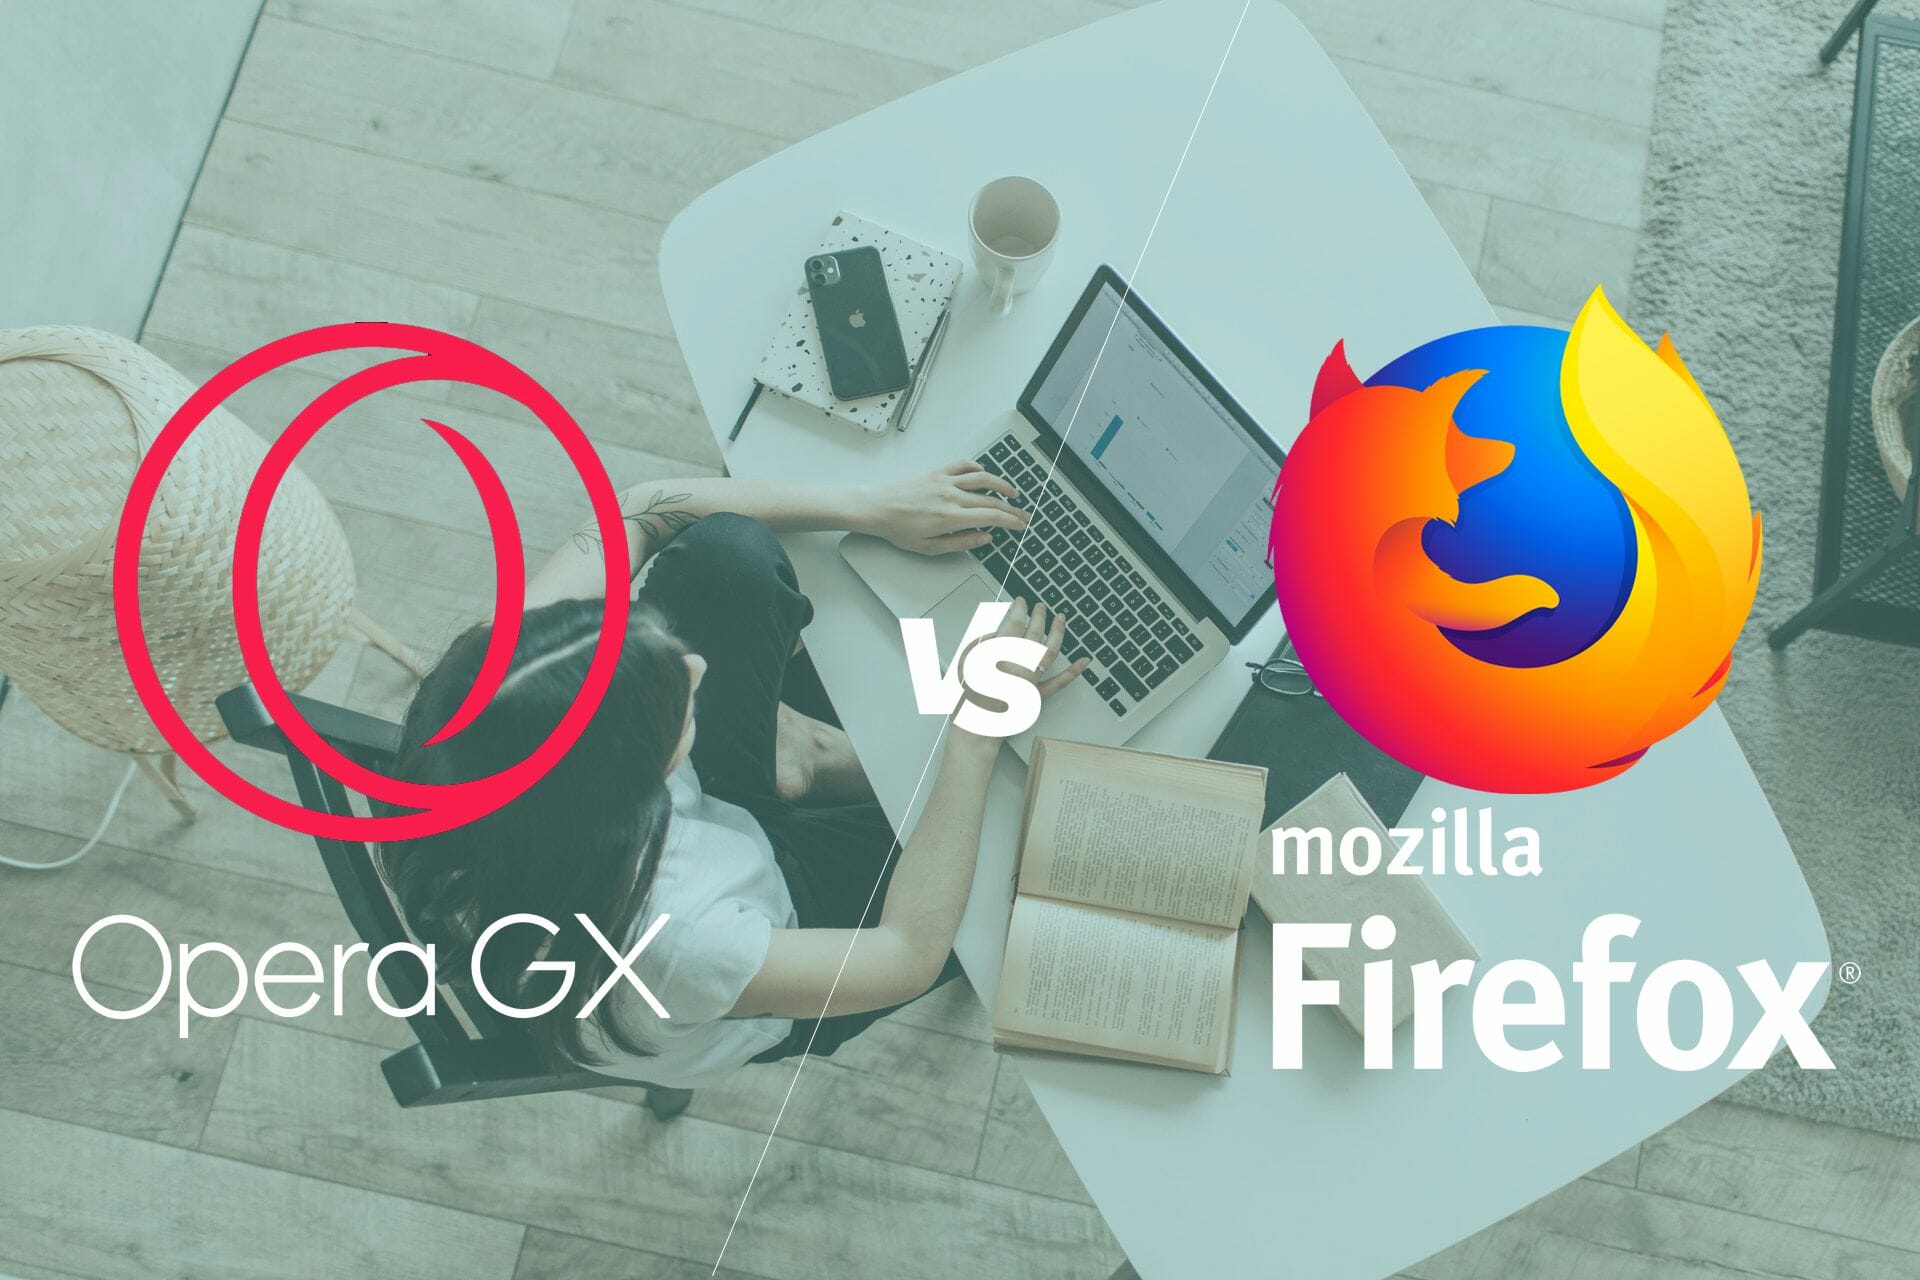 navegadores opera gx firefox